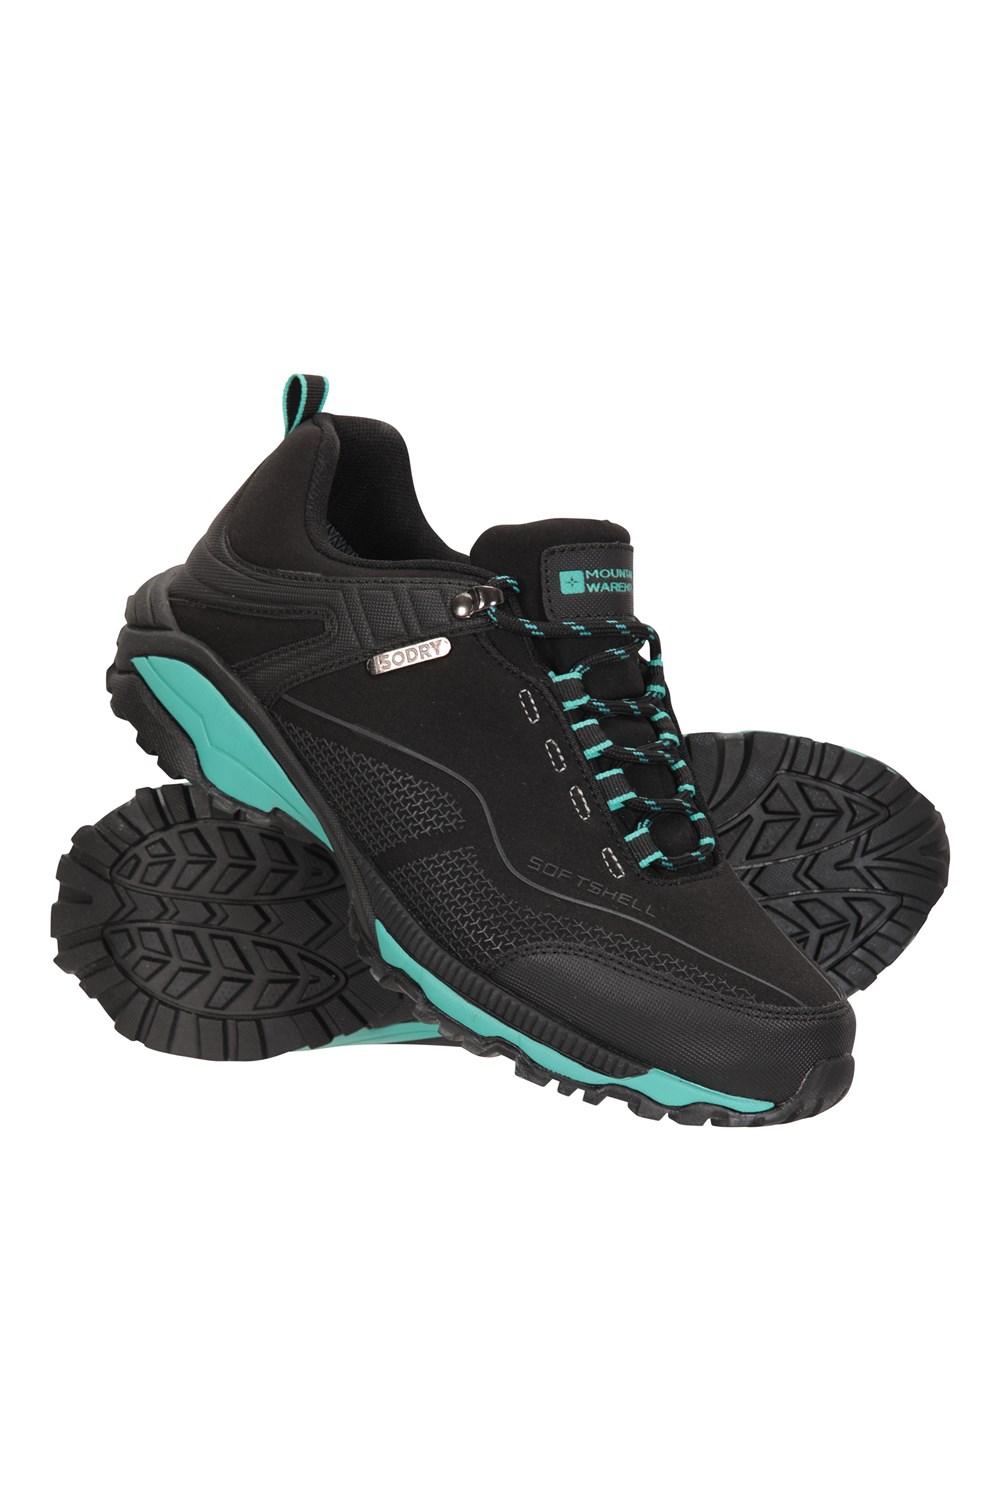 Mountain Warehouse Womens Lightweight Waterproof Shoes Walking Trainers | eBay